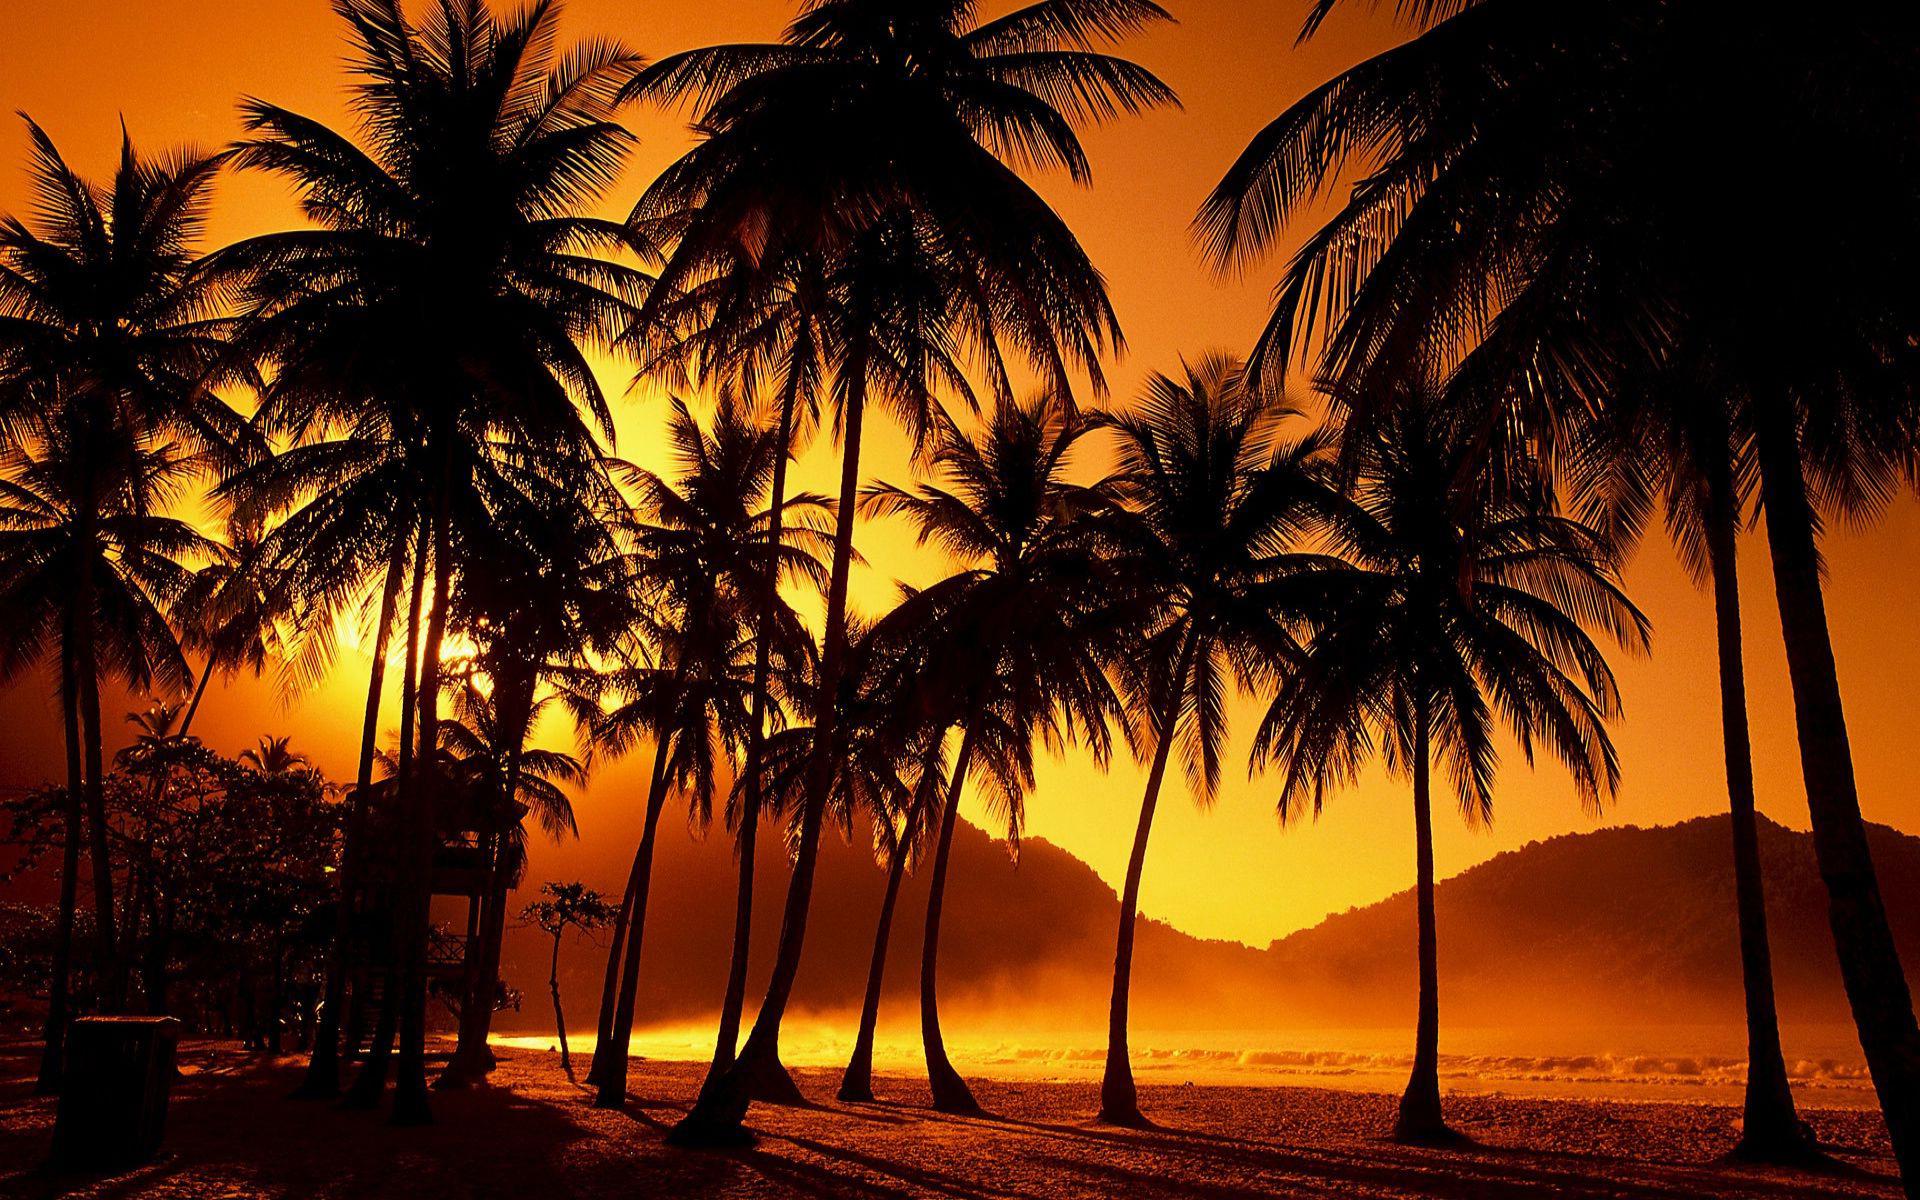 palm trees desktop wallpaper